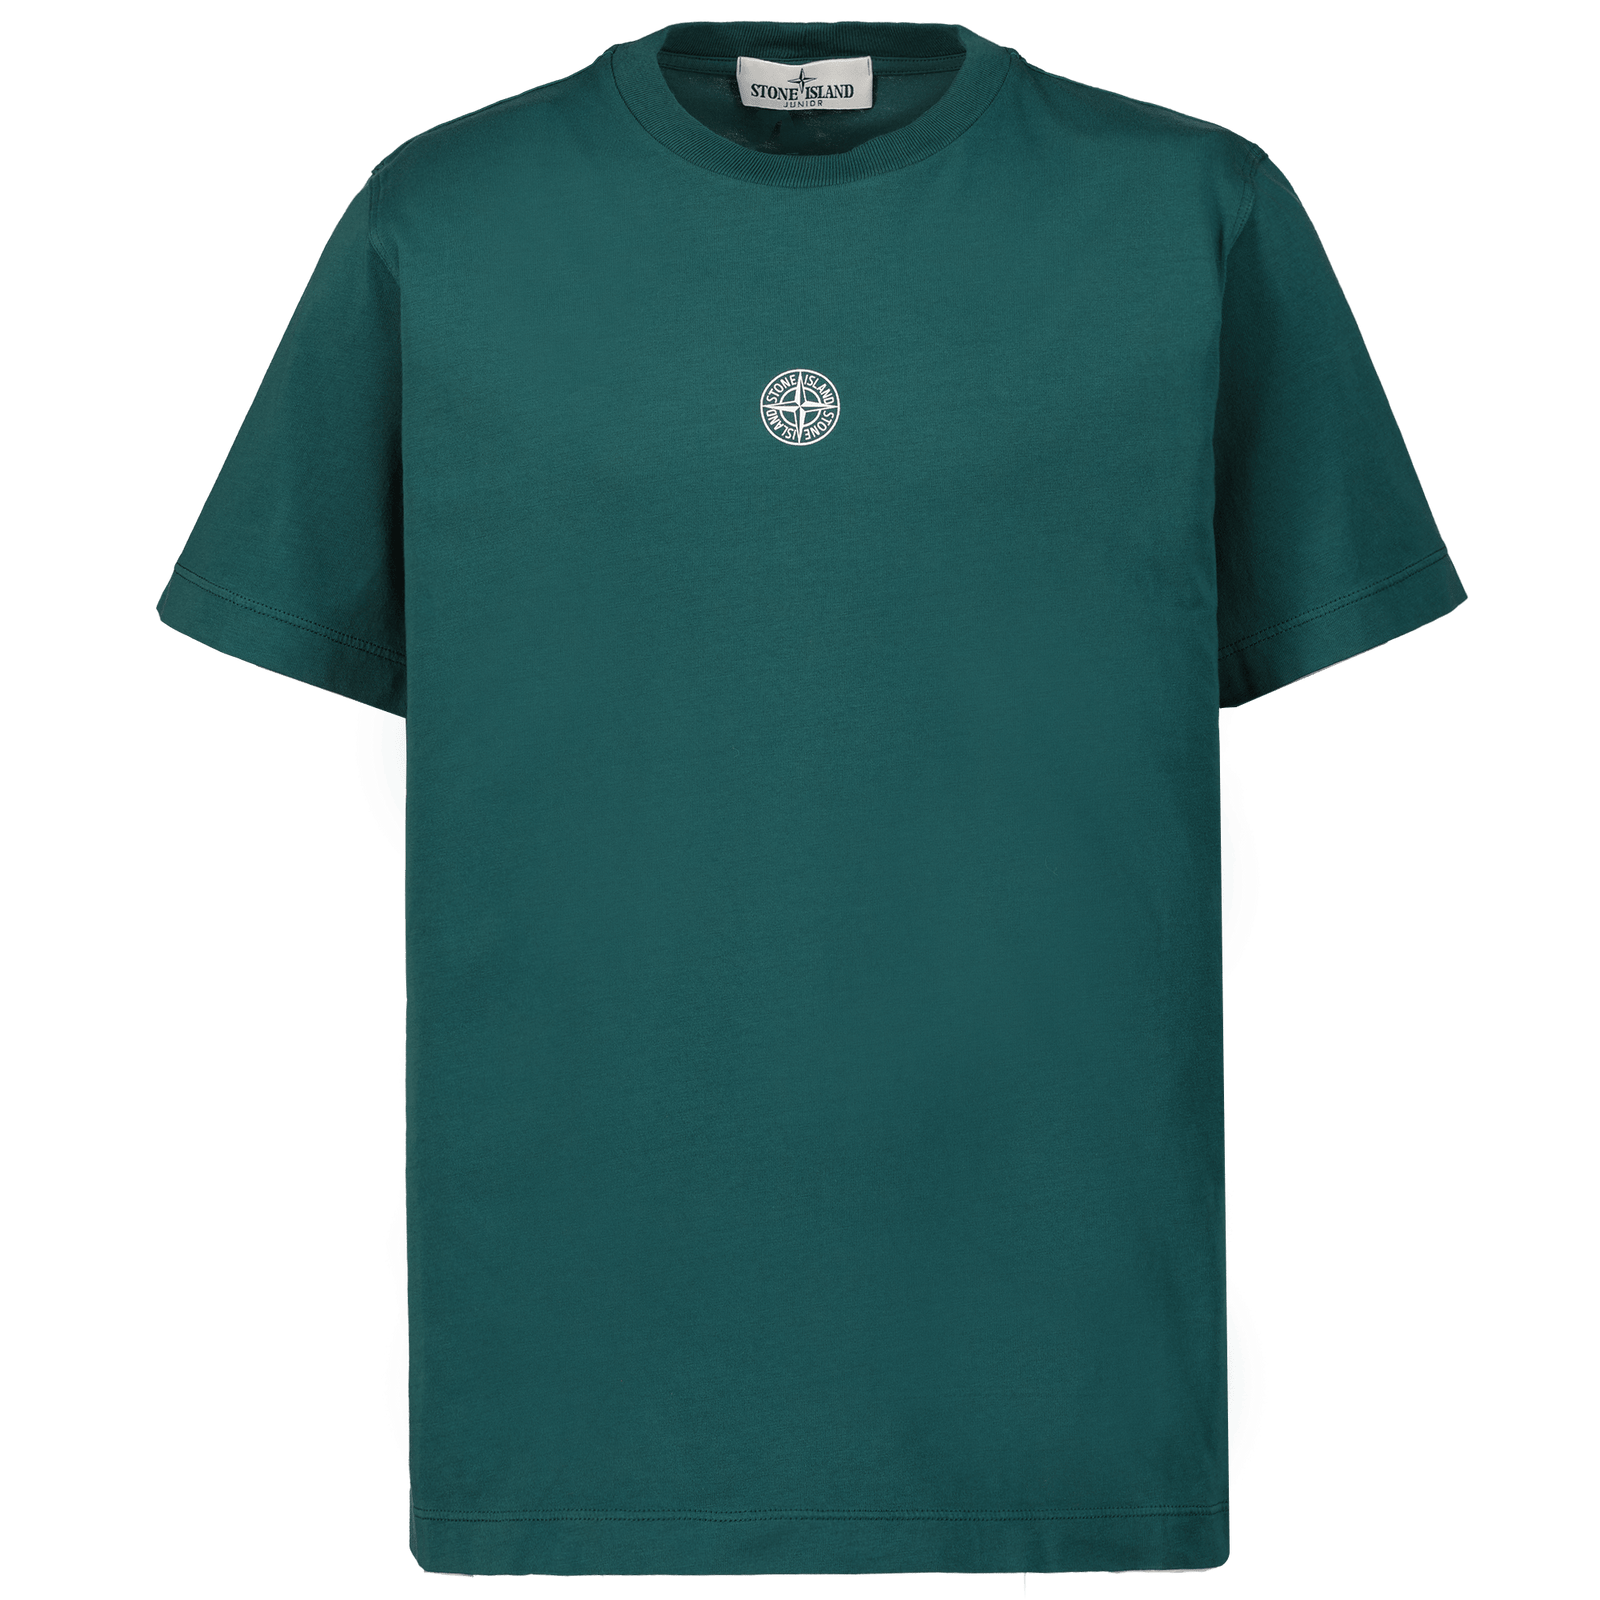 Stone Island Kinder Jongens T-Shirt Donker Groen - Superstellar